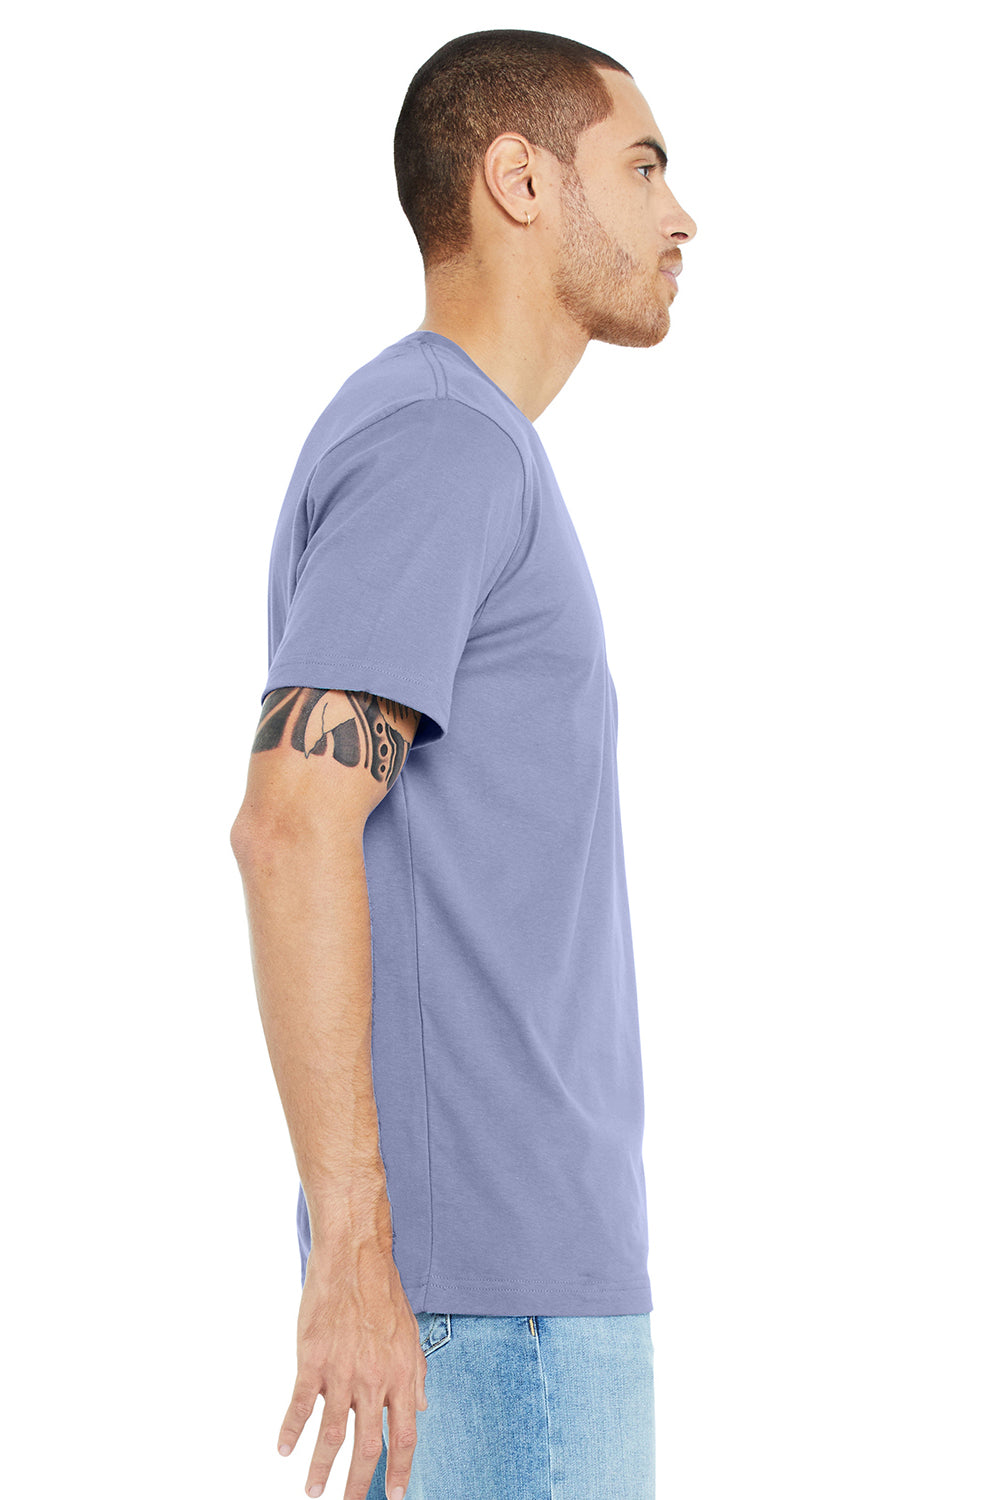 Bella + Canvas BC3001/3001C Mens Jersey Short Sleeve Crewneck T-Shirt Lavender Blue Model Side